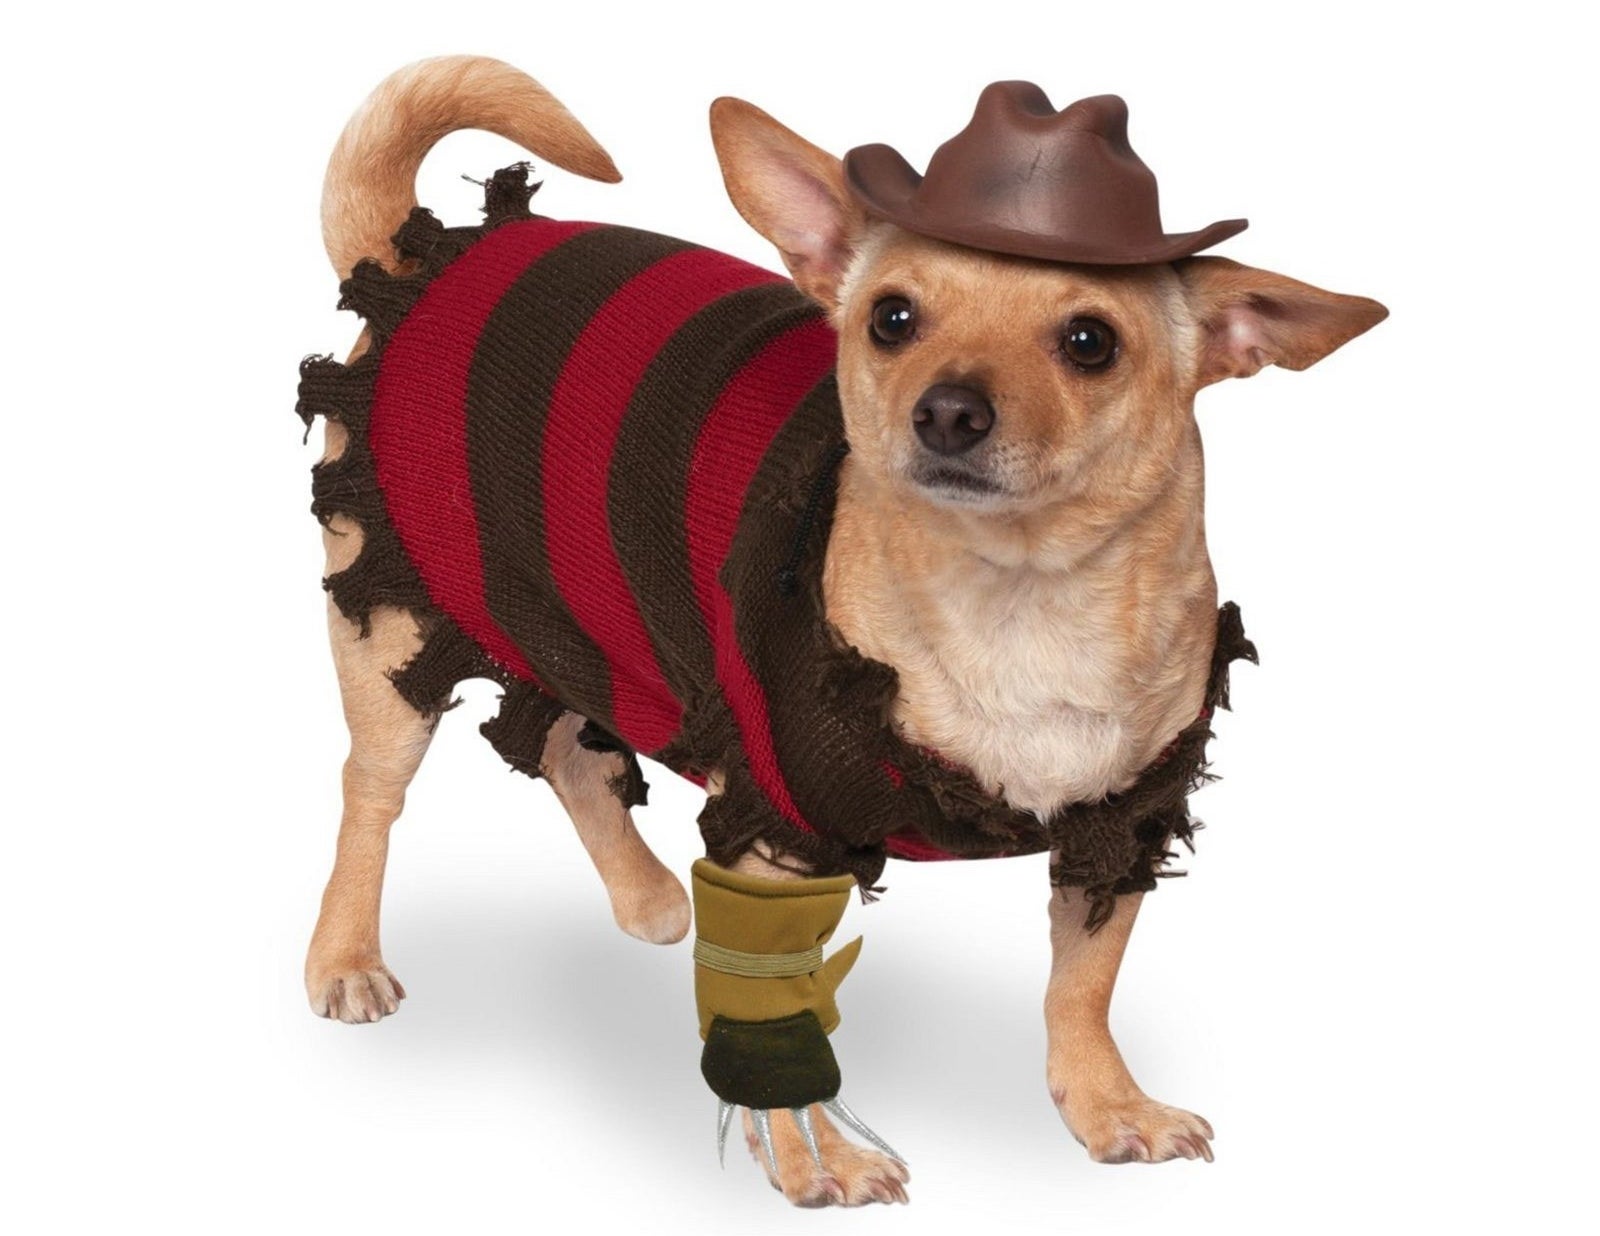 small dog wearing the Freddy Krueger costume